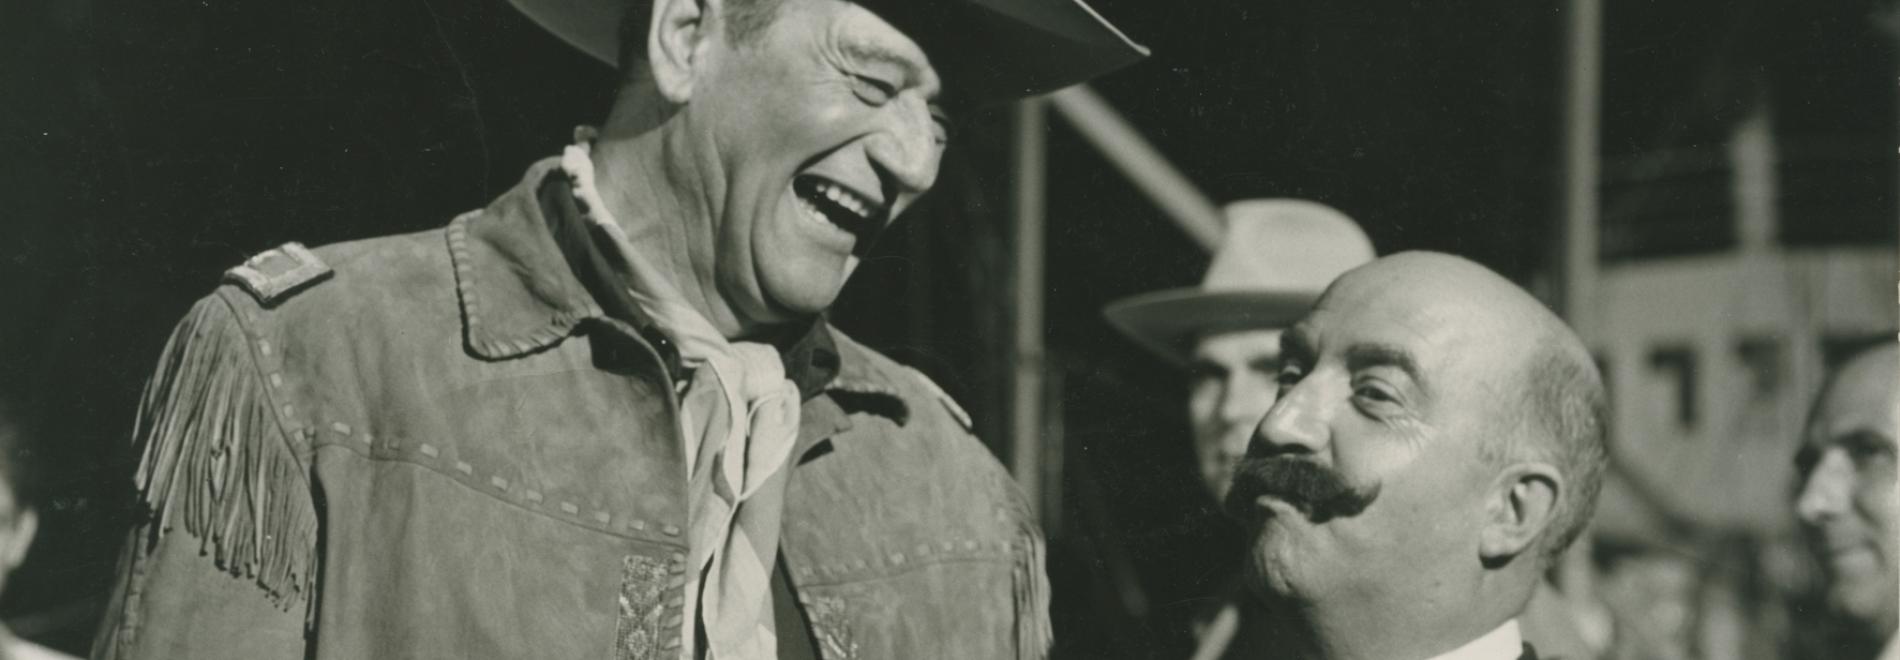 Rodatge d’El fabulós món del circ (Henry Hathaway, 1964) amb John Wayne i Claudi Gómez Grau. Fons Gómez Grau.